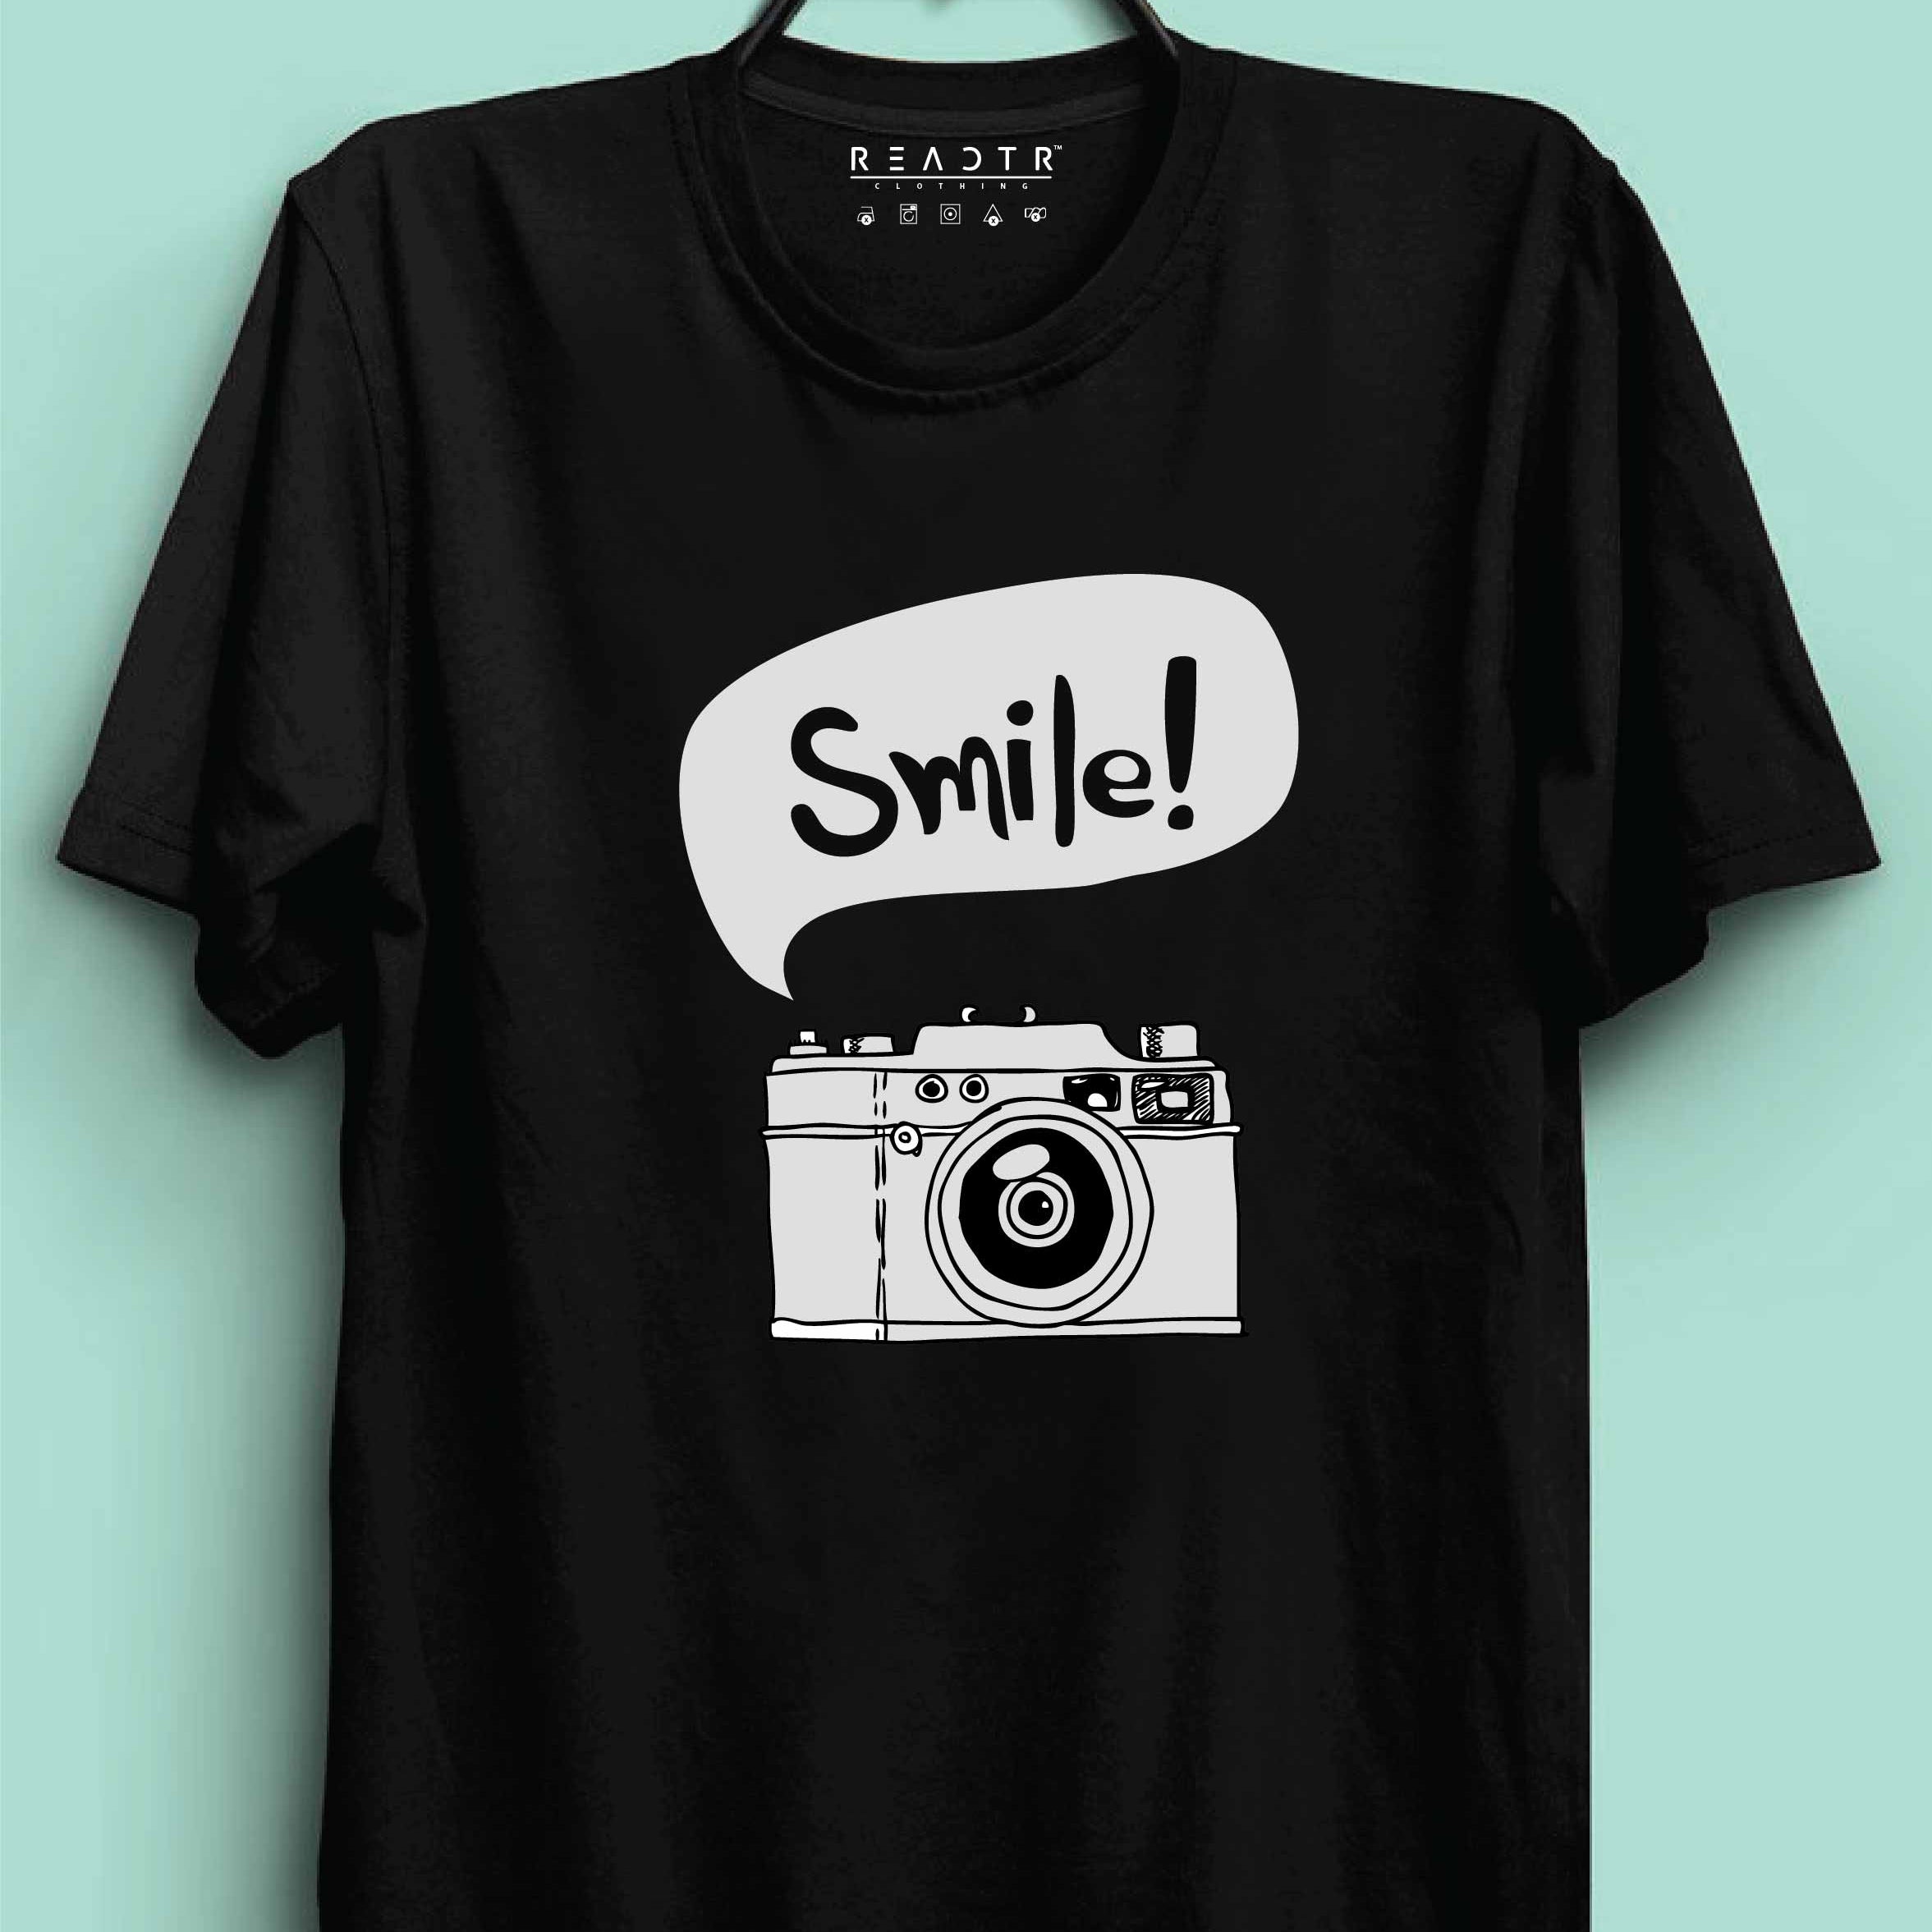 Smile Reactr Tshirts For Men - Eyewearlabs